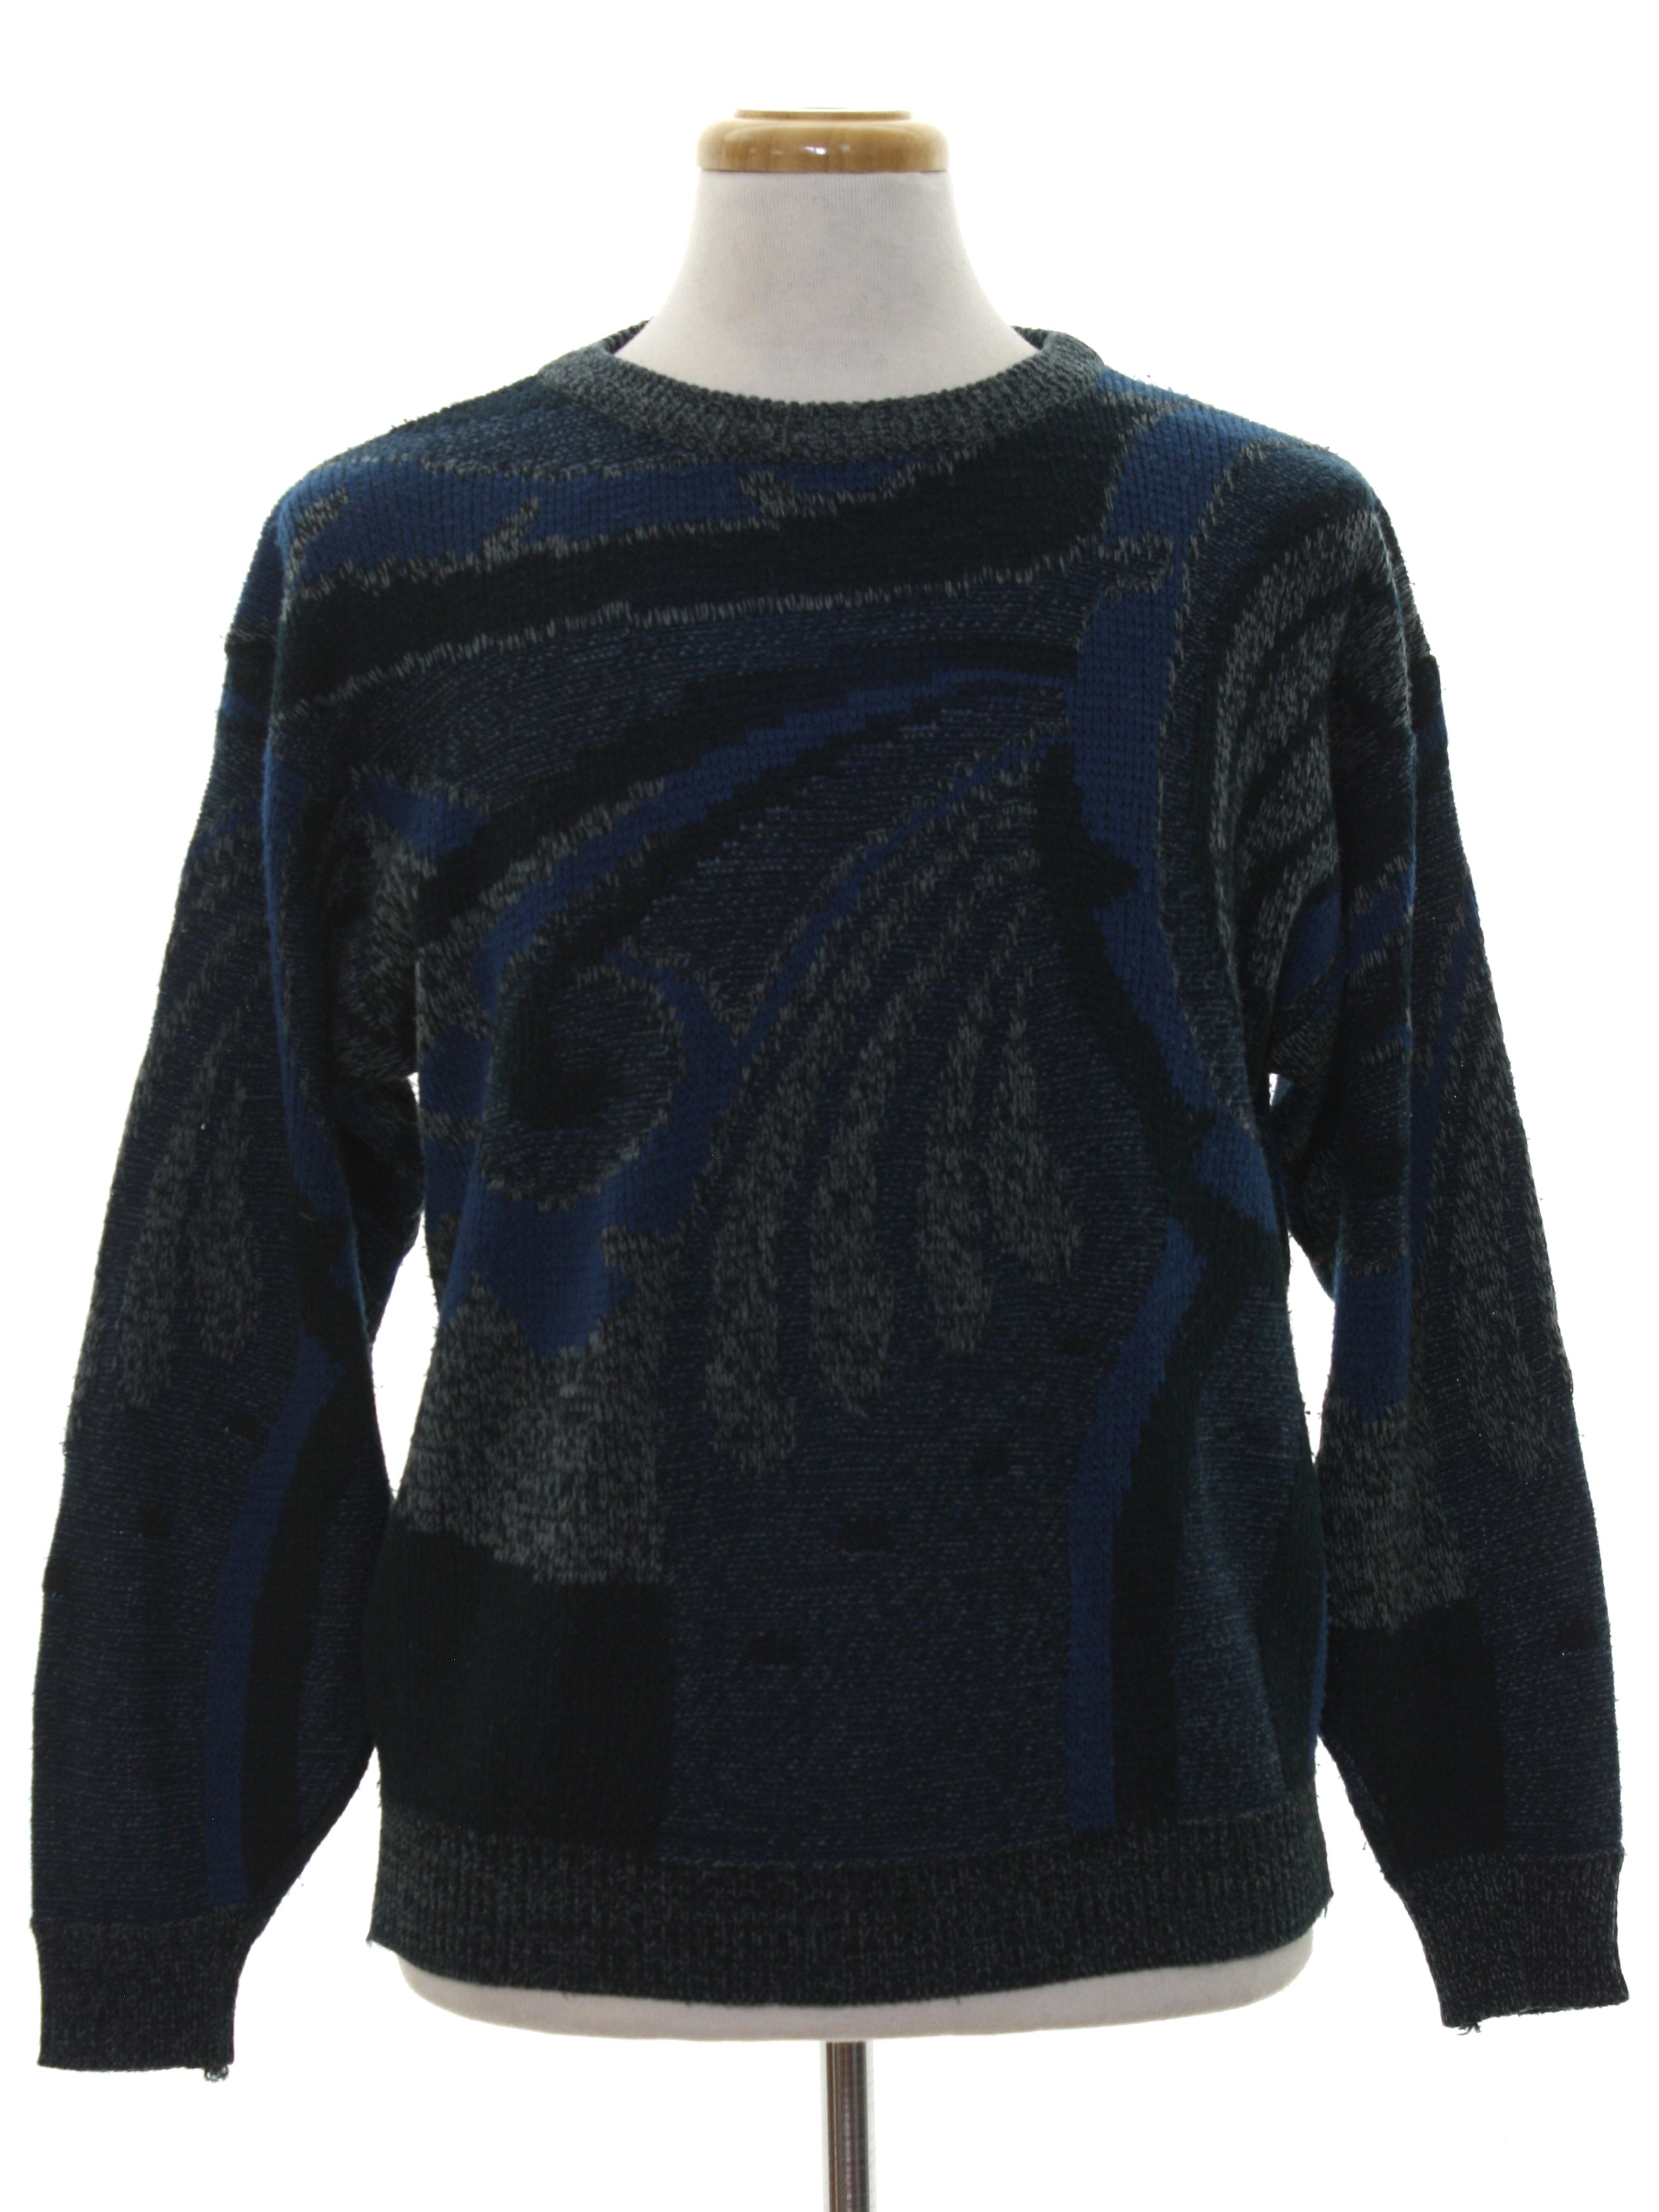 Retro 1980's Sweater (Saturdays) : 80s -Saturdays- Mens navy blue ...